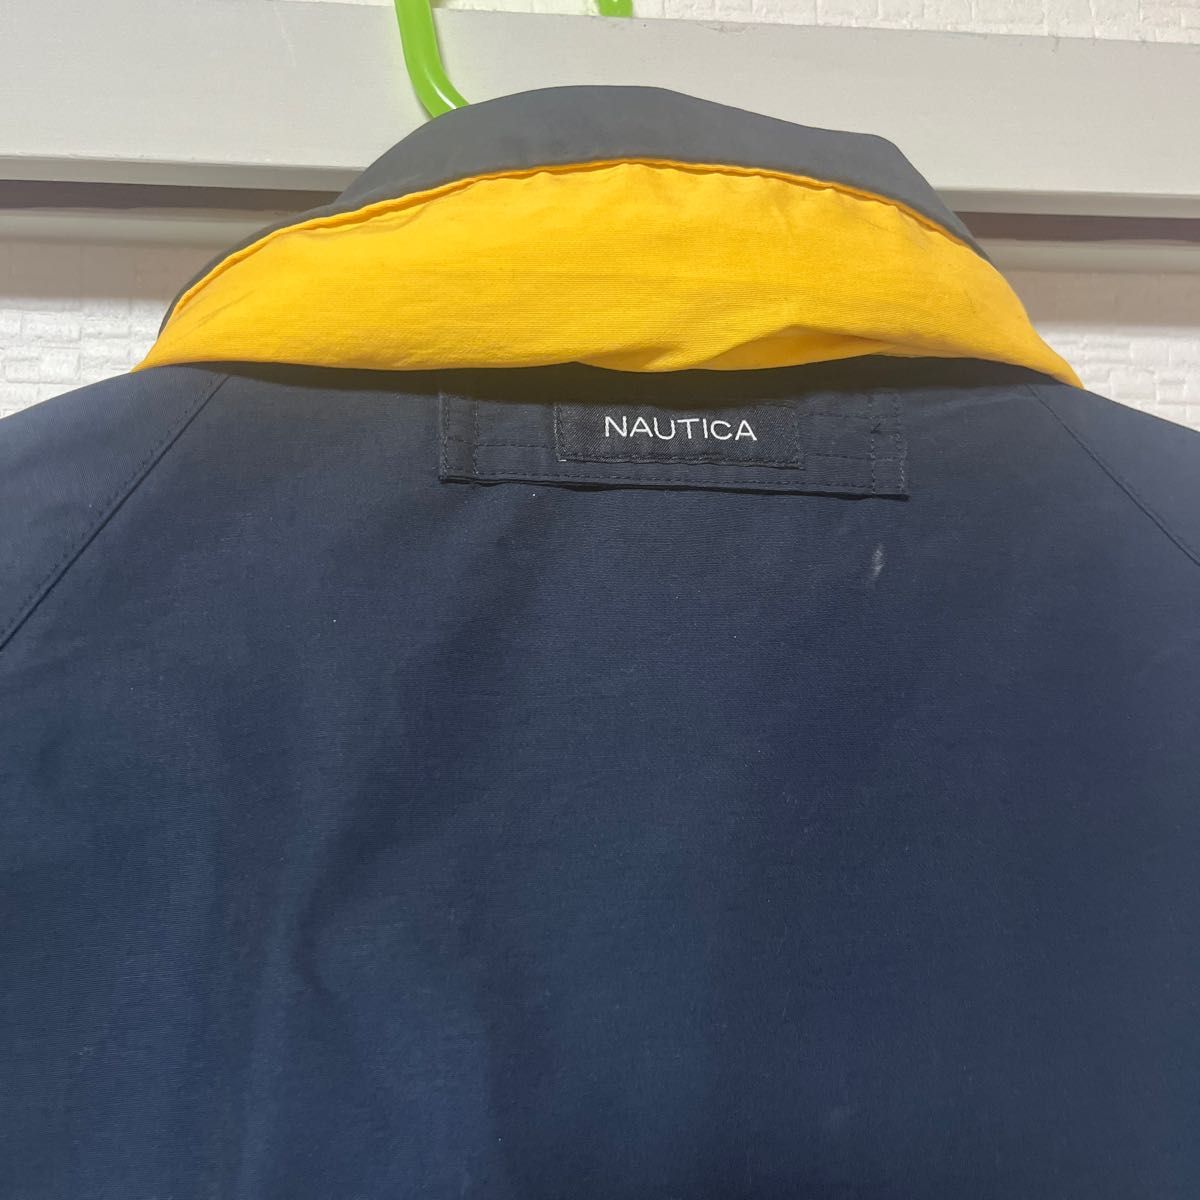 nauticaジップパーカー JACKET ナイロンジャケット スノボウェア ボードウェア 4000円から値下げしました